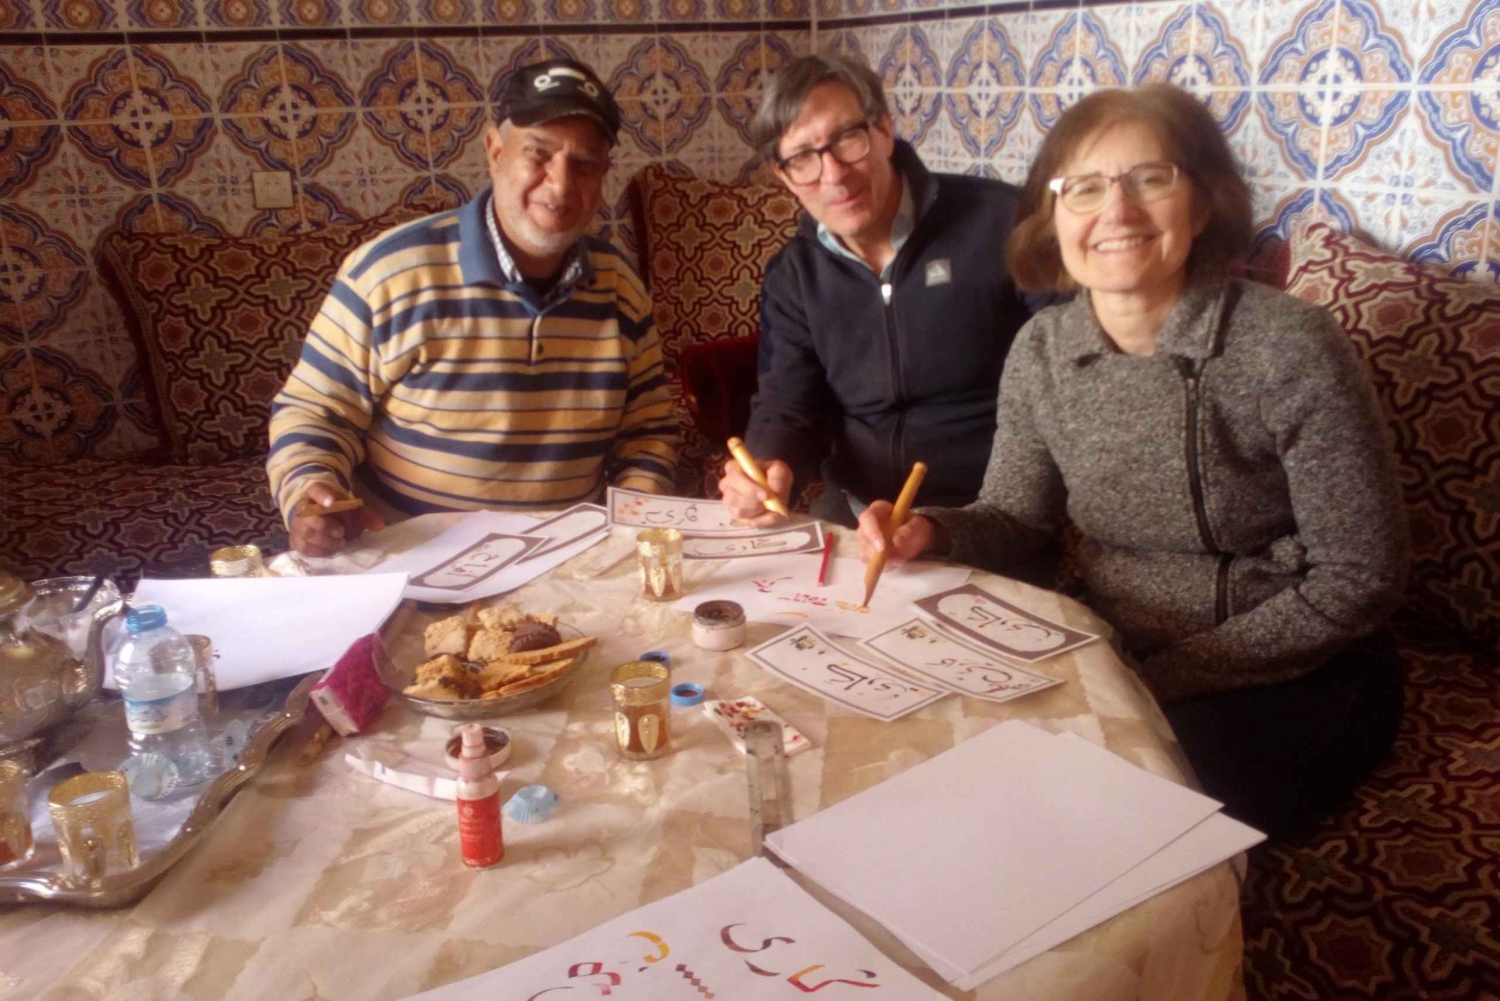 Marrakesh: Arabic Calligraphy Class